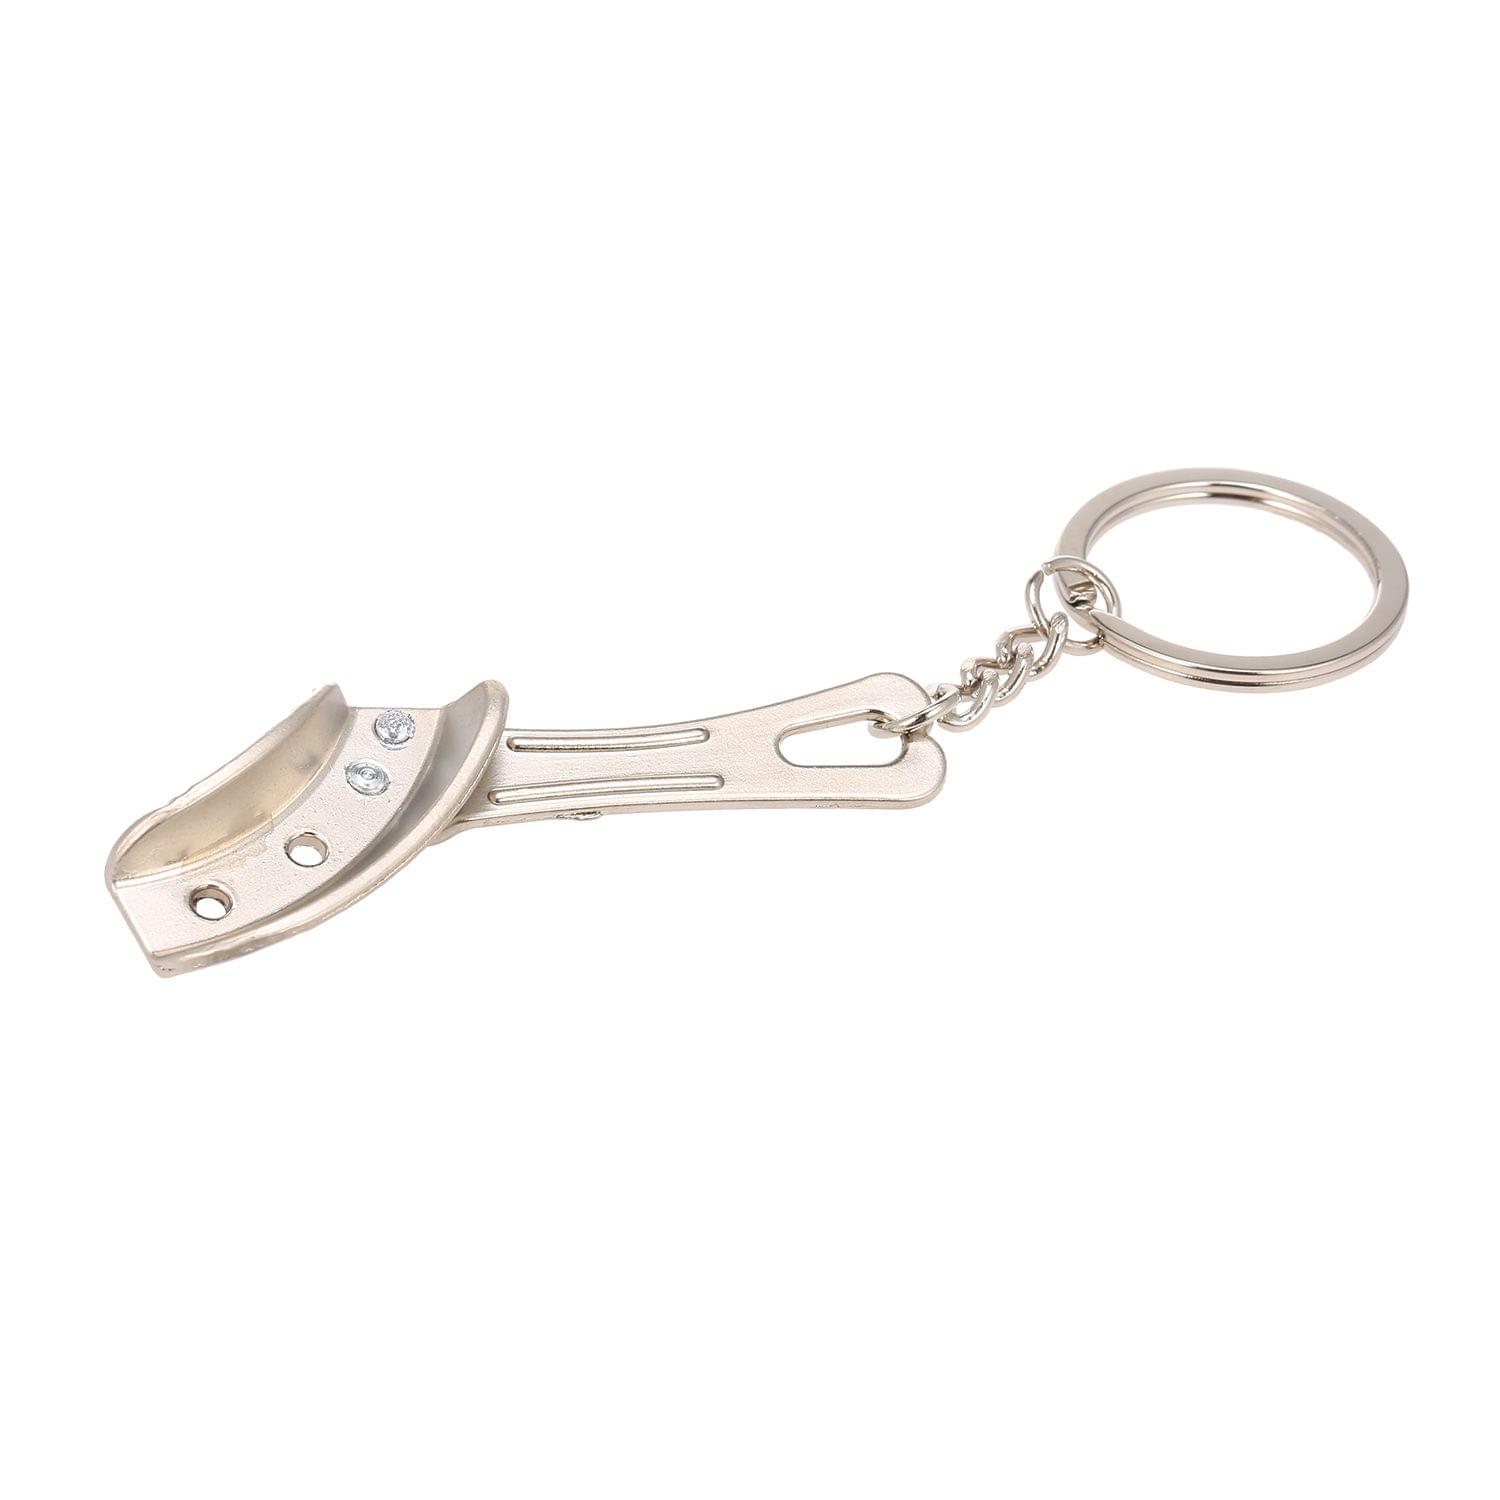 Denture-shaped Key Chain Dental Theme Stainless Steel Key - Denture-shaped